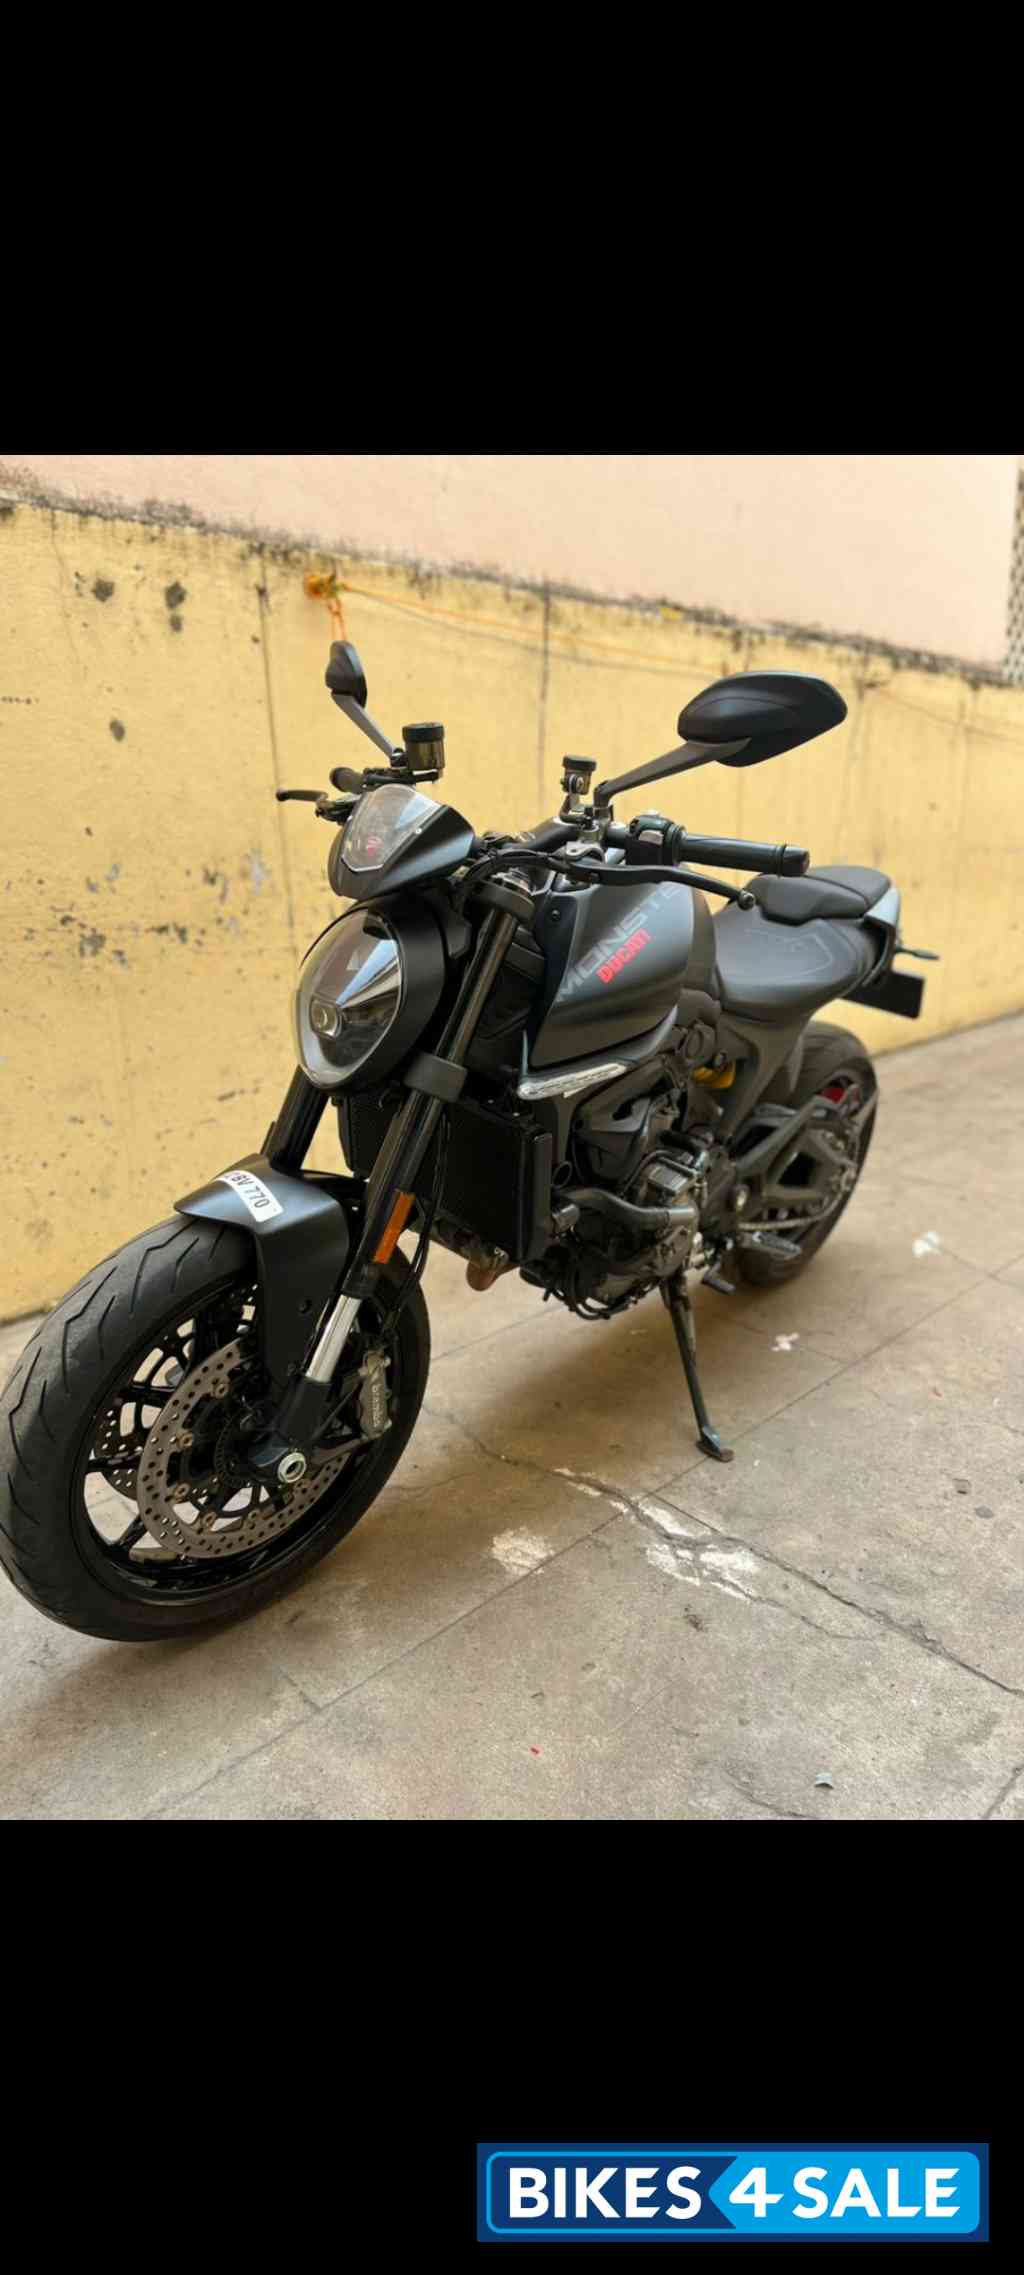 Black Ducati Monster 937cc